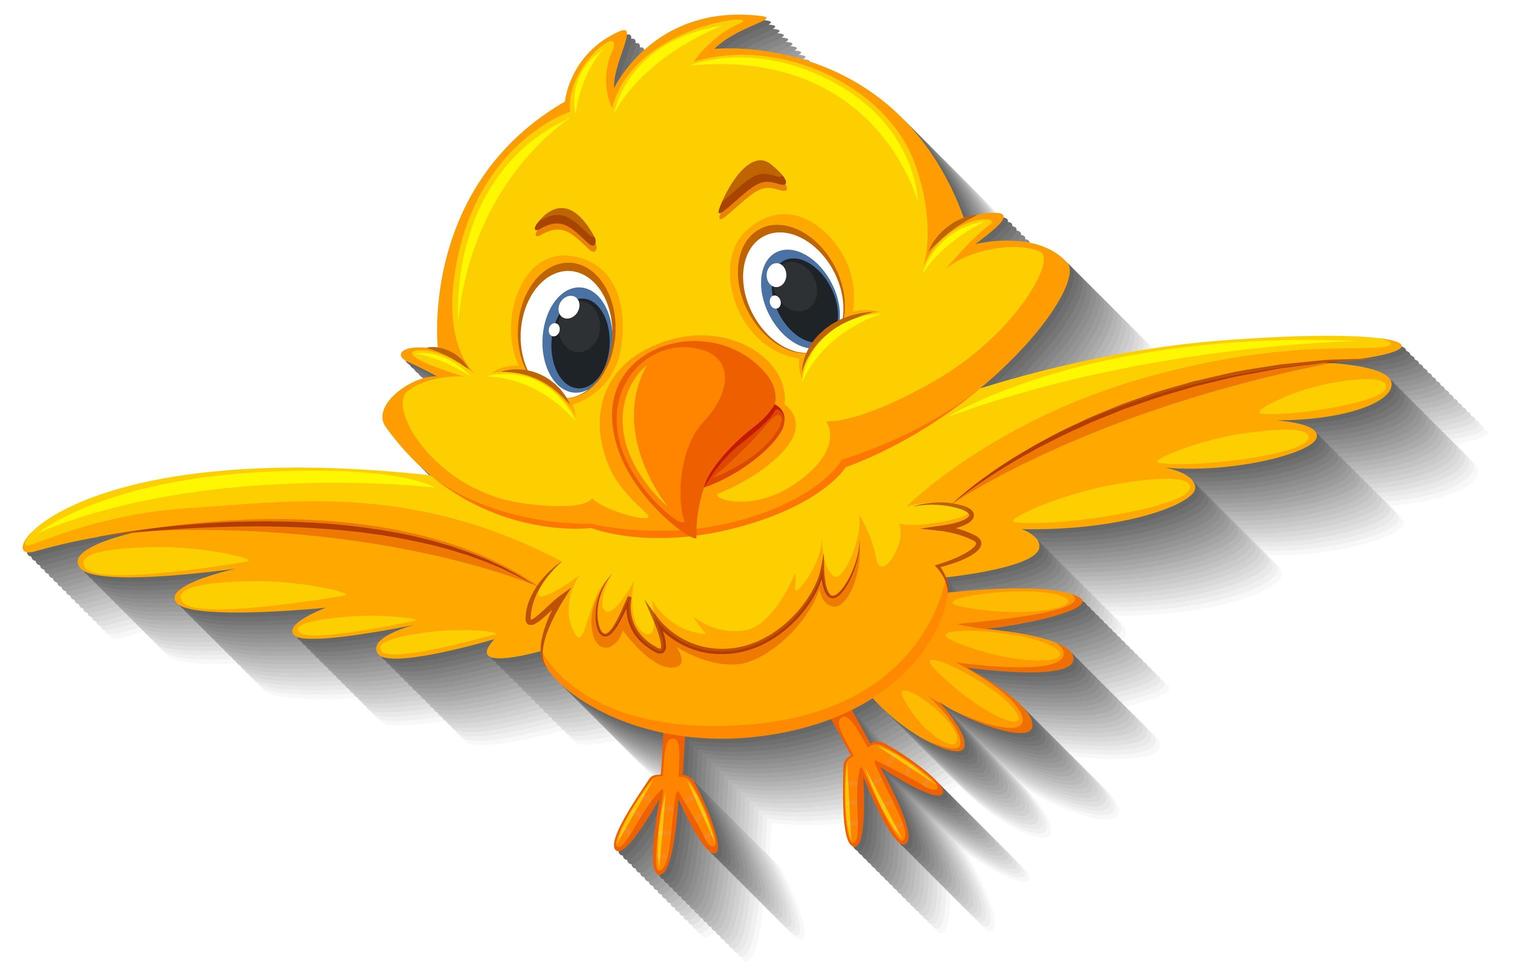 Amarillo Aves Juguete imagen png  imagen transparente descarga gratuita